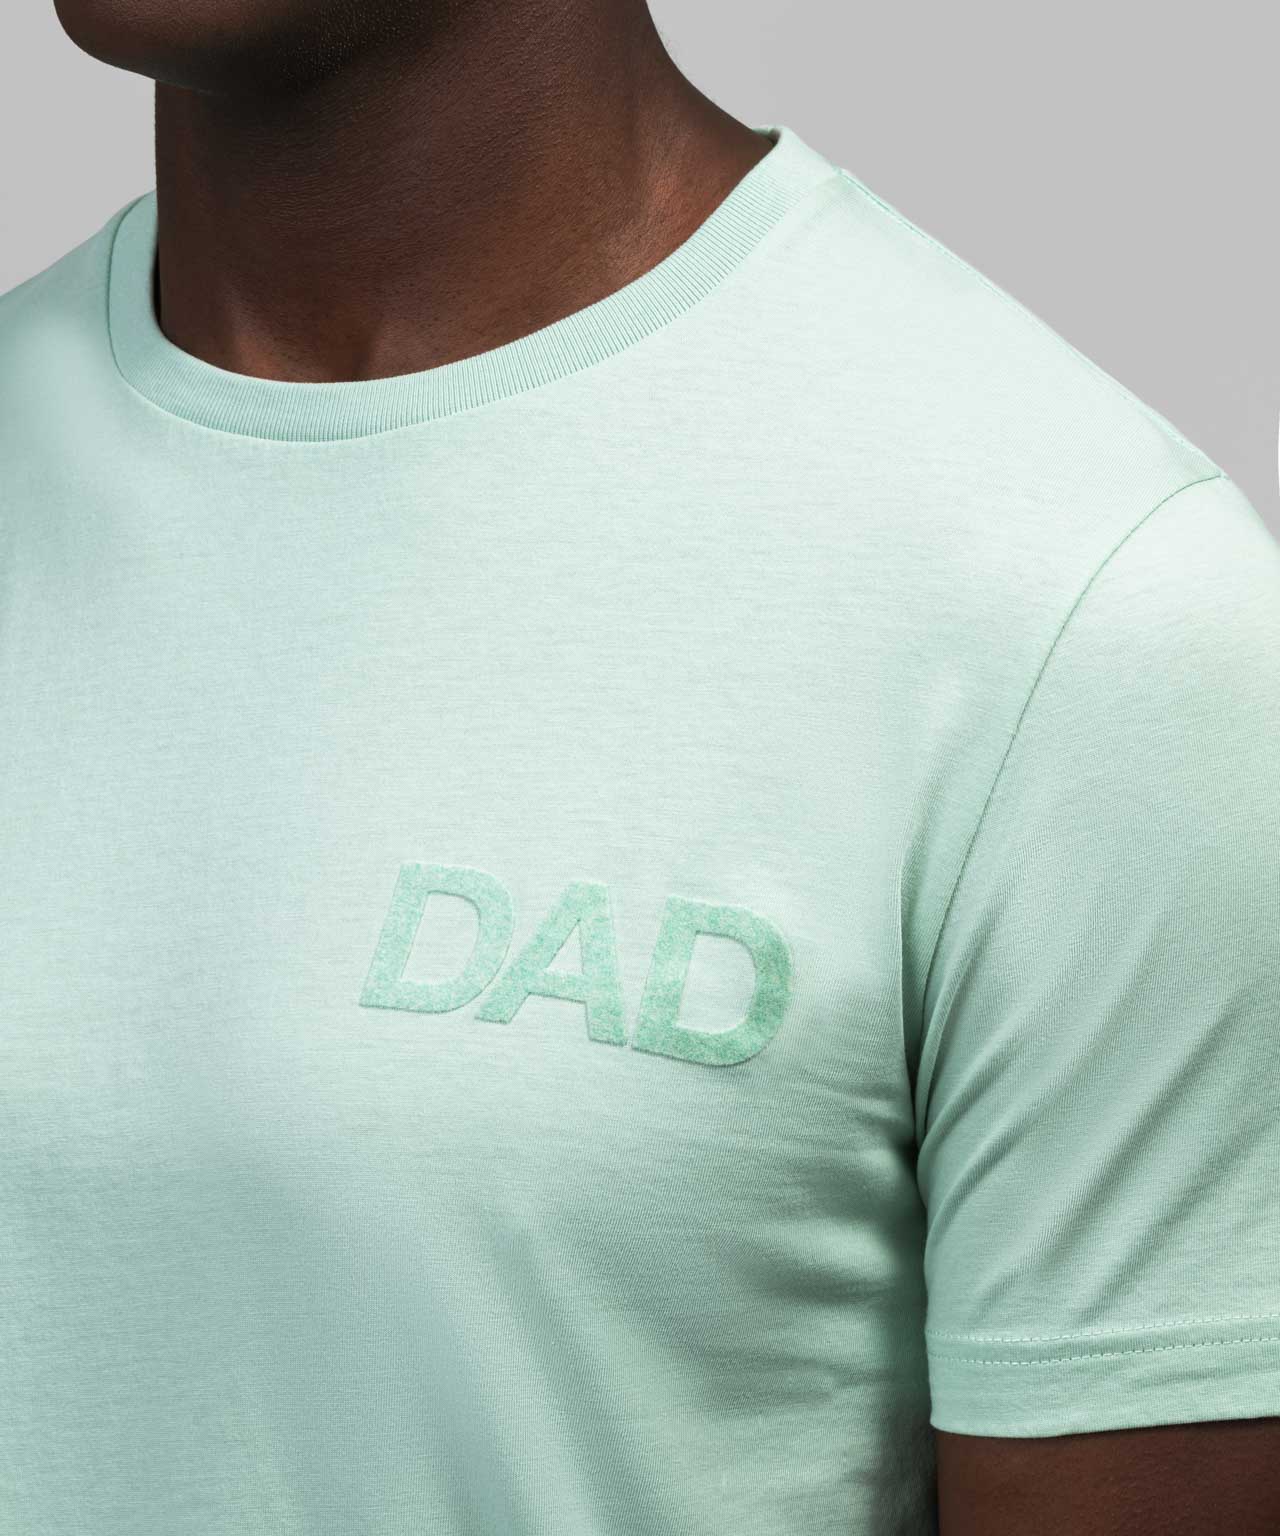 Organic Cotton T-Shirt DAD: Pistachio Green